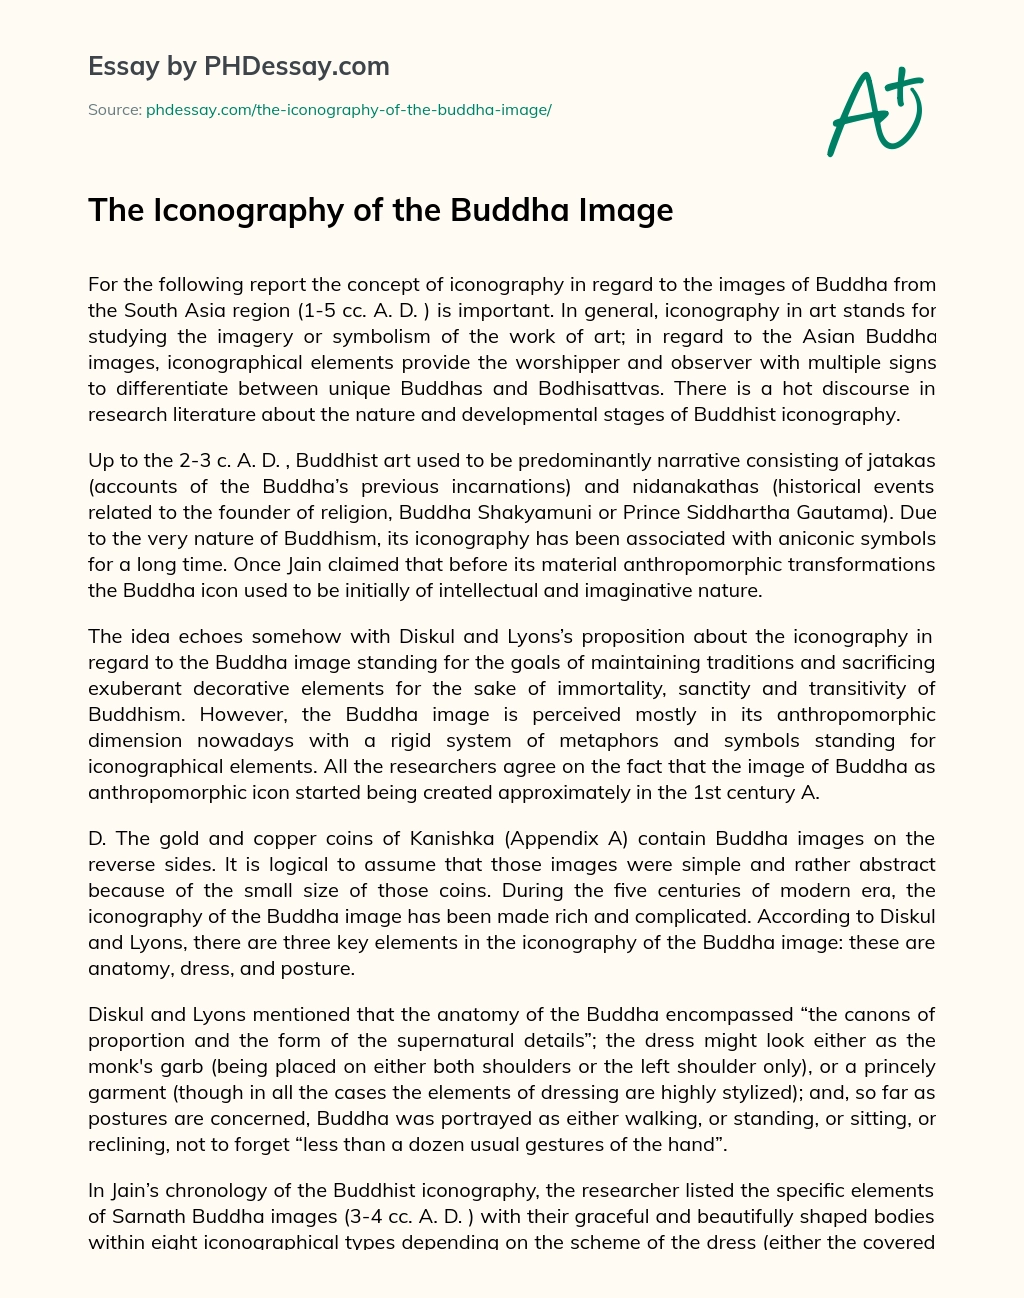 The Iconography of the Buddha Image essay